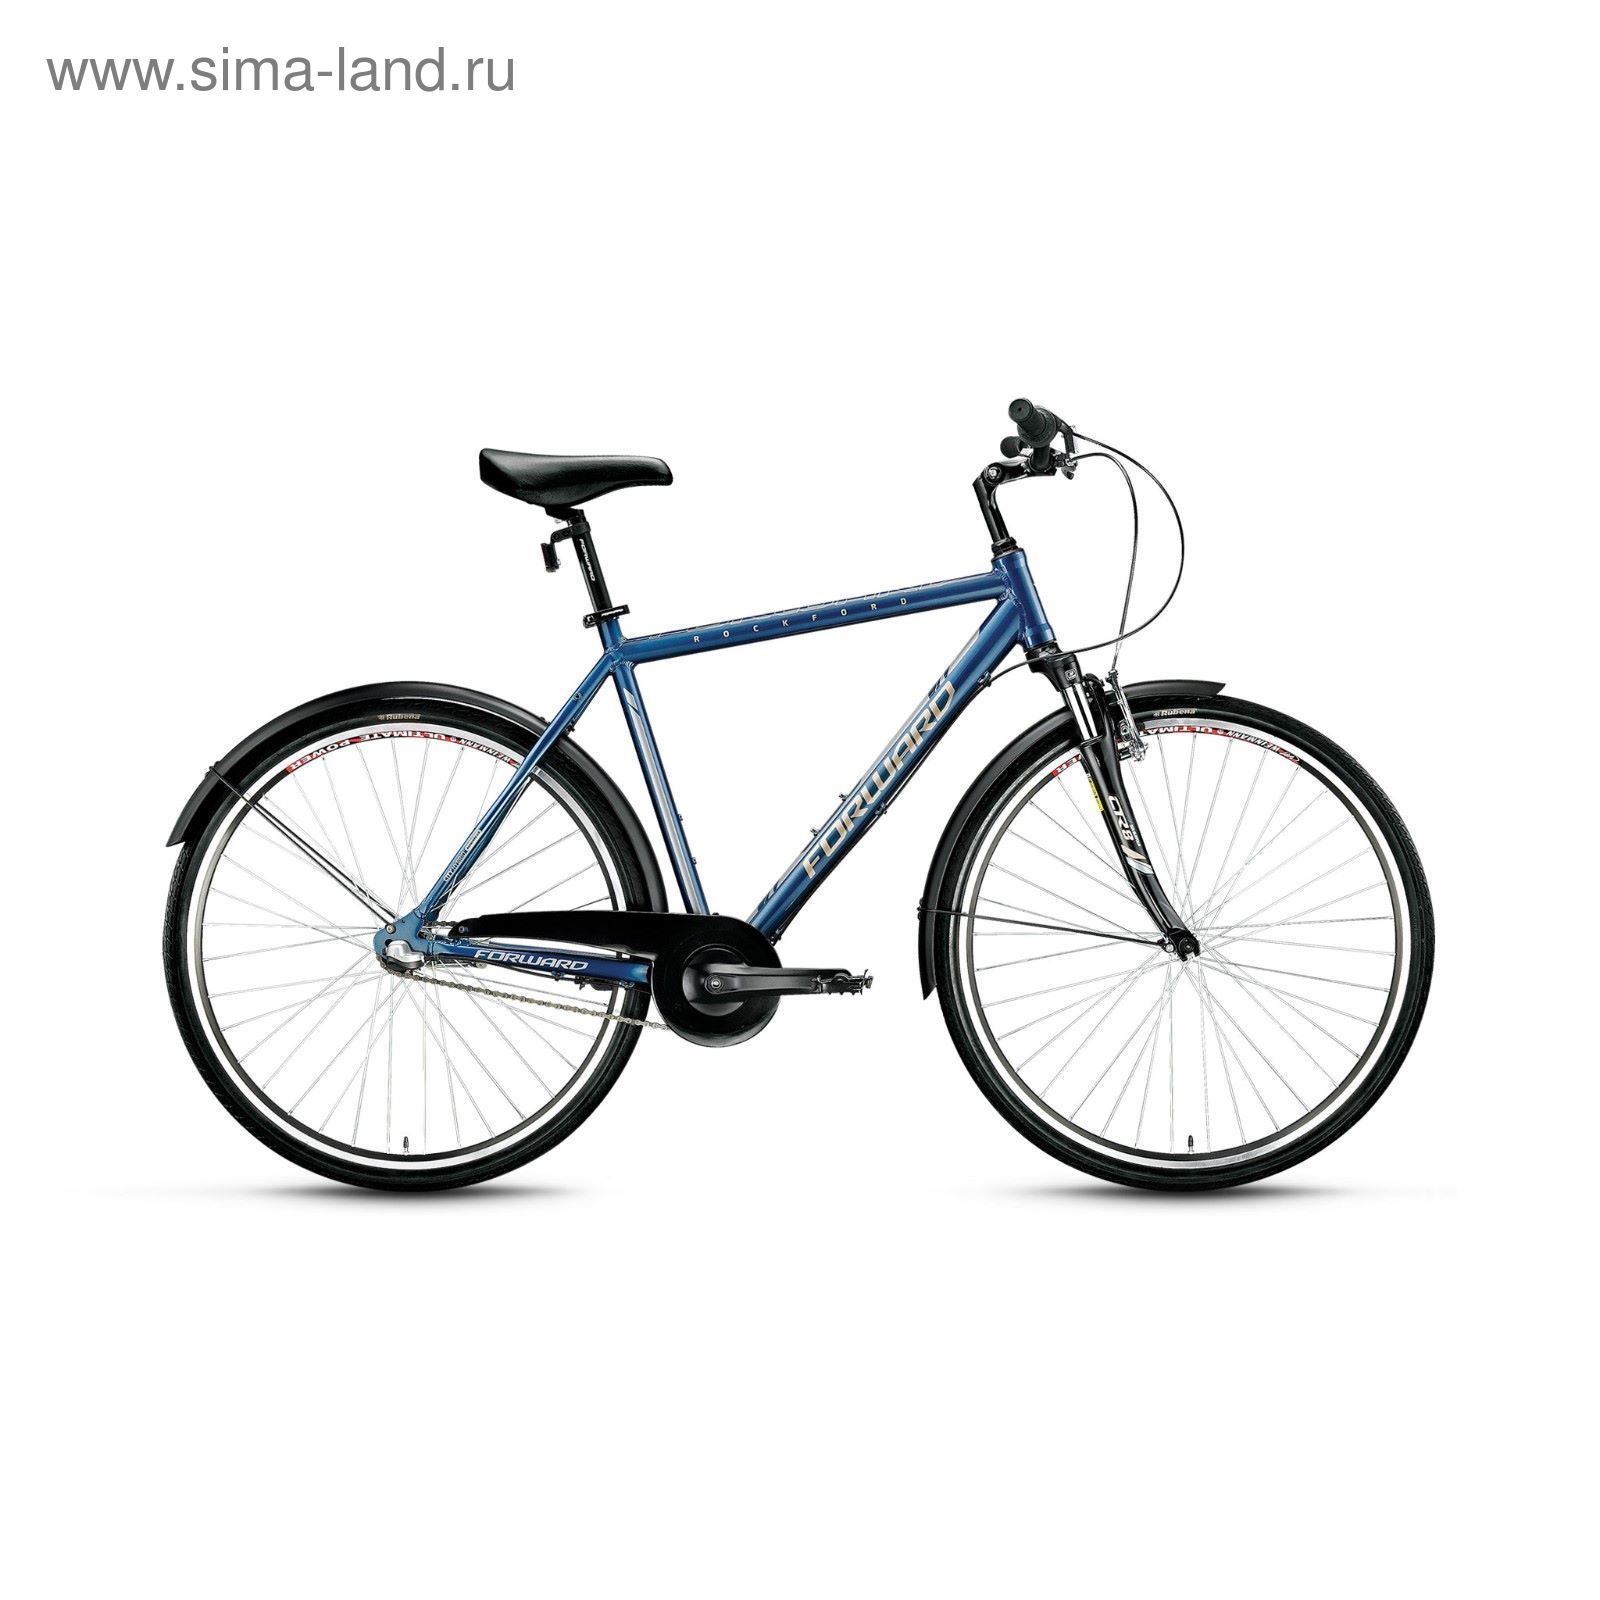 Велосипед 28" Forward Rockford 2.0, 2017, цвет синий, размер рамы 500 мм